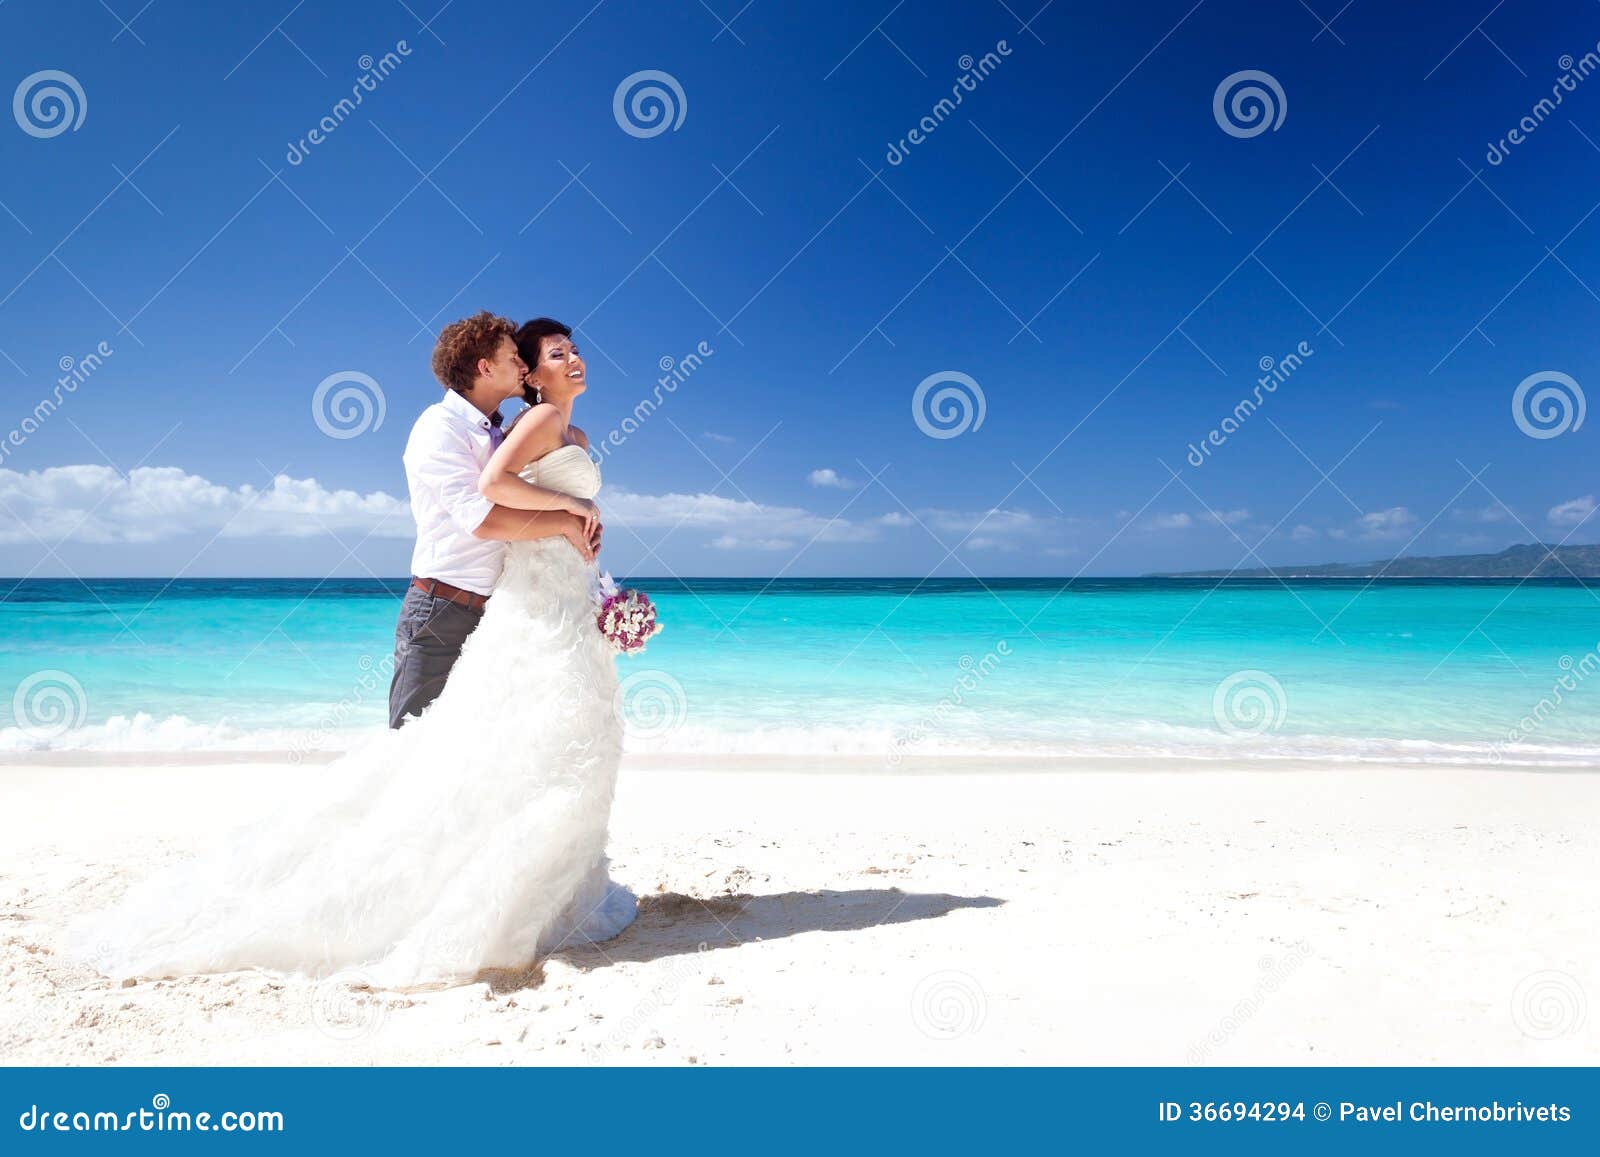 Wedding couple on beach stock photo. Image of purple